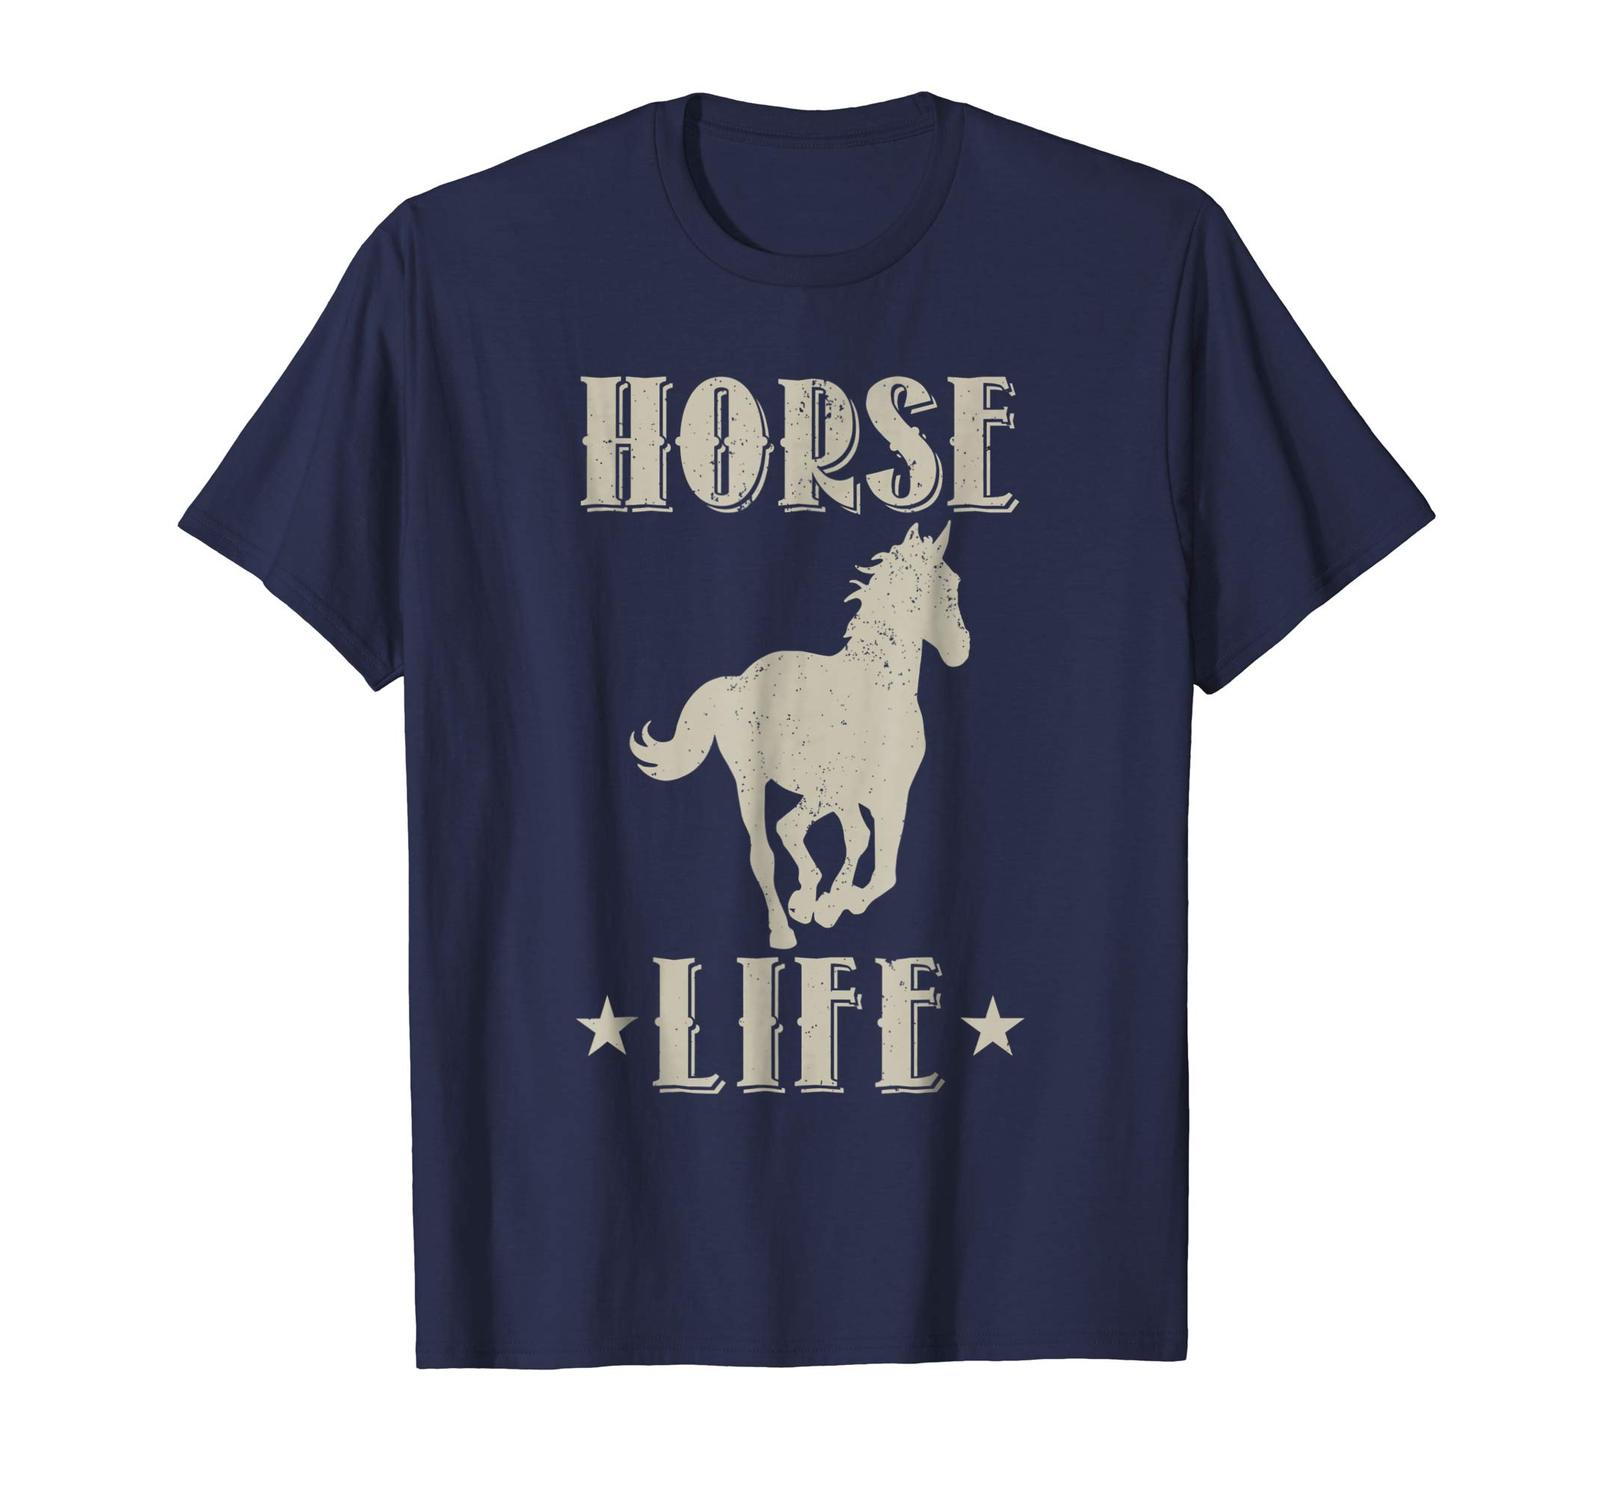 Dog Fashion - Horse Life T-Shirt - Best Gift Idea (Men Women Teens Kids Men